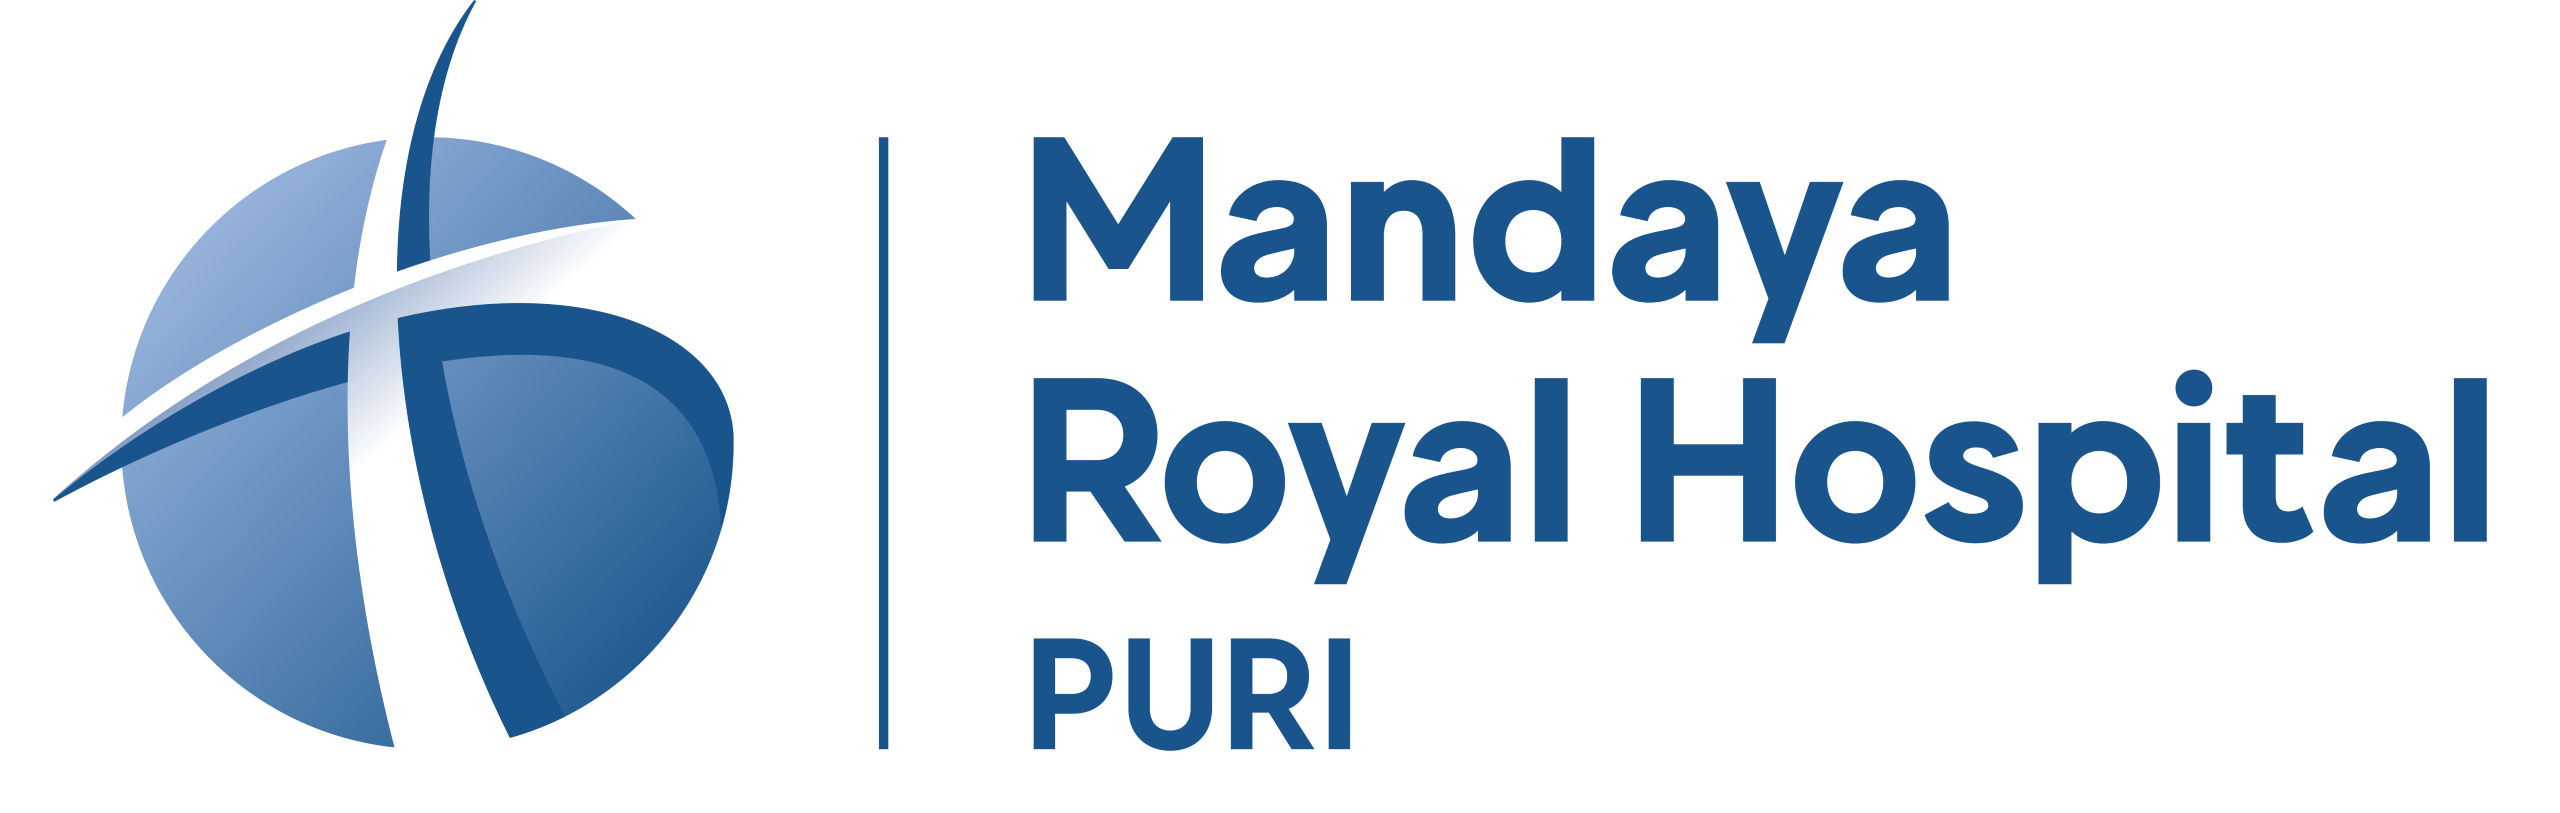 Mandaya Royal Hospital